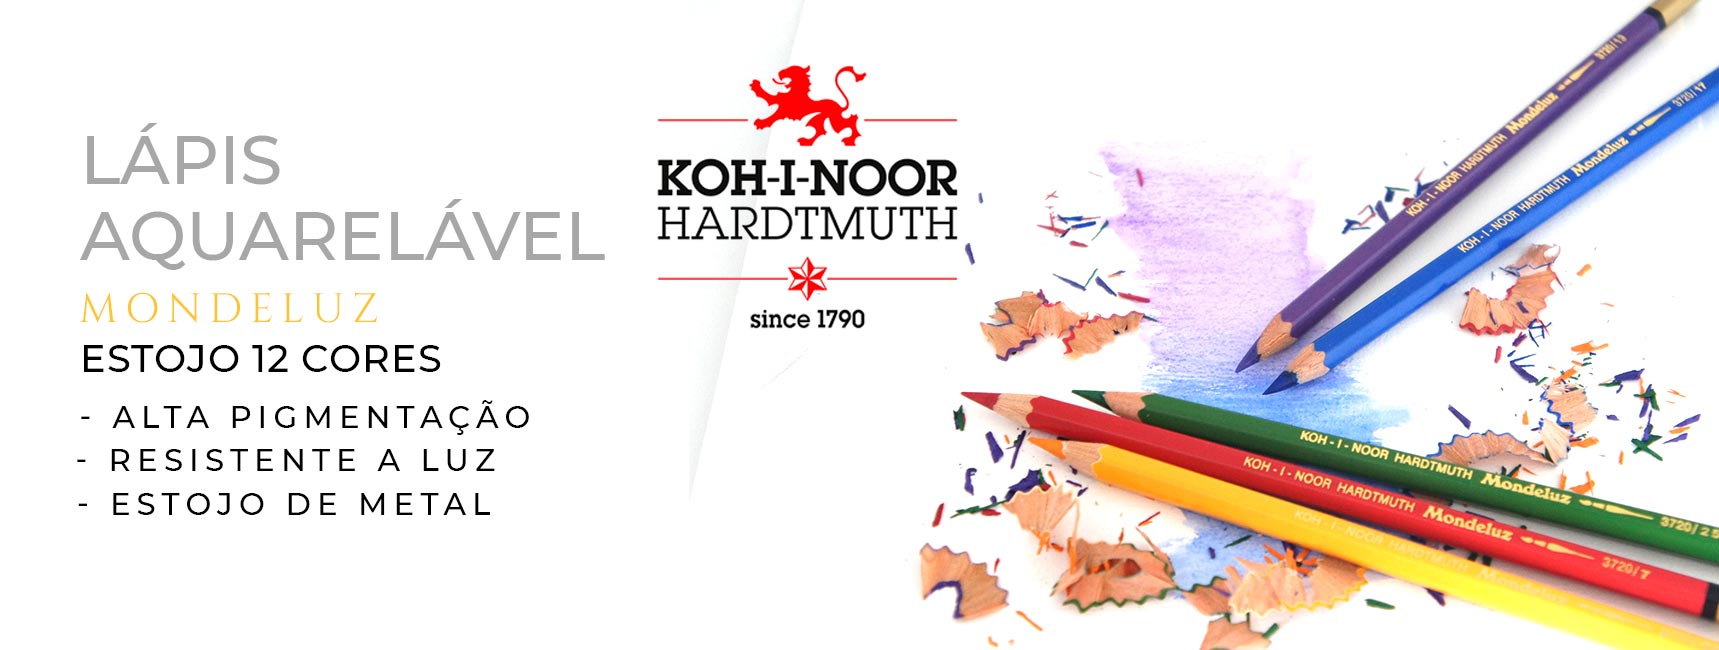 Estojo lápis aquarelavel 12 cores mondeluz Koh-I-Noor